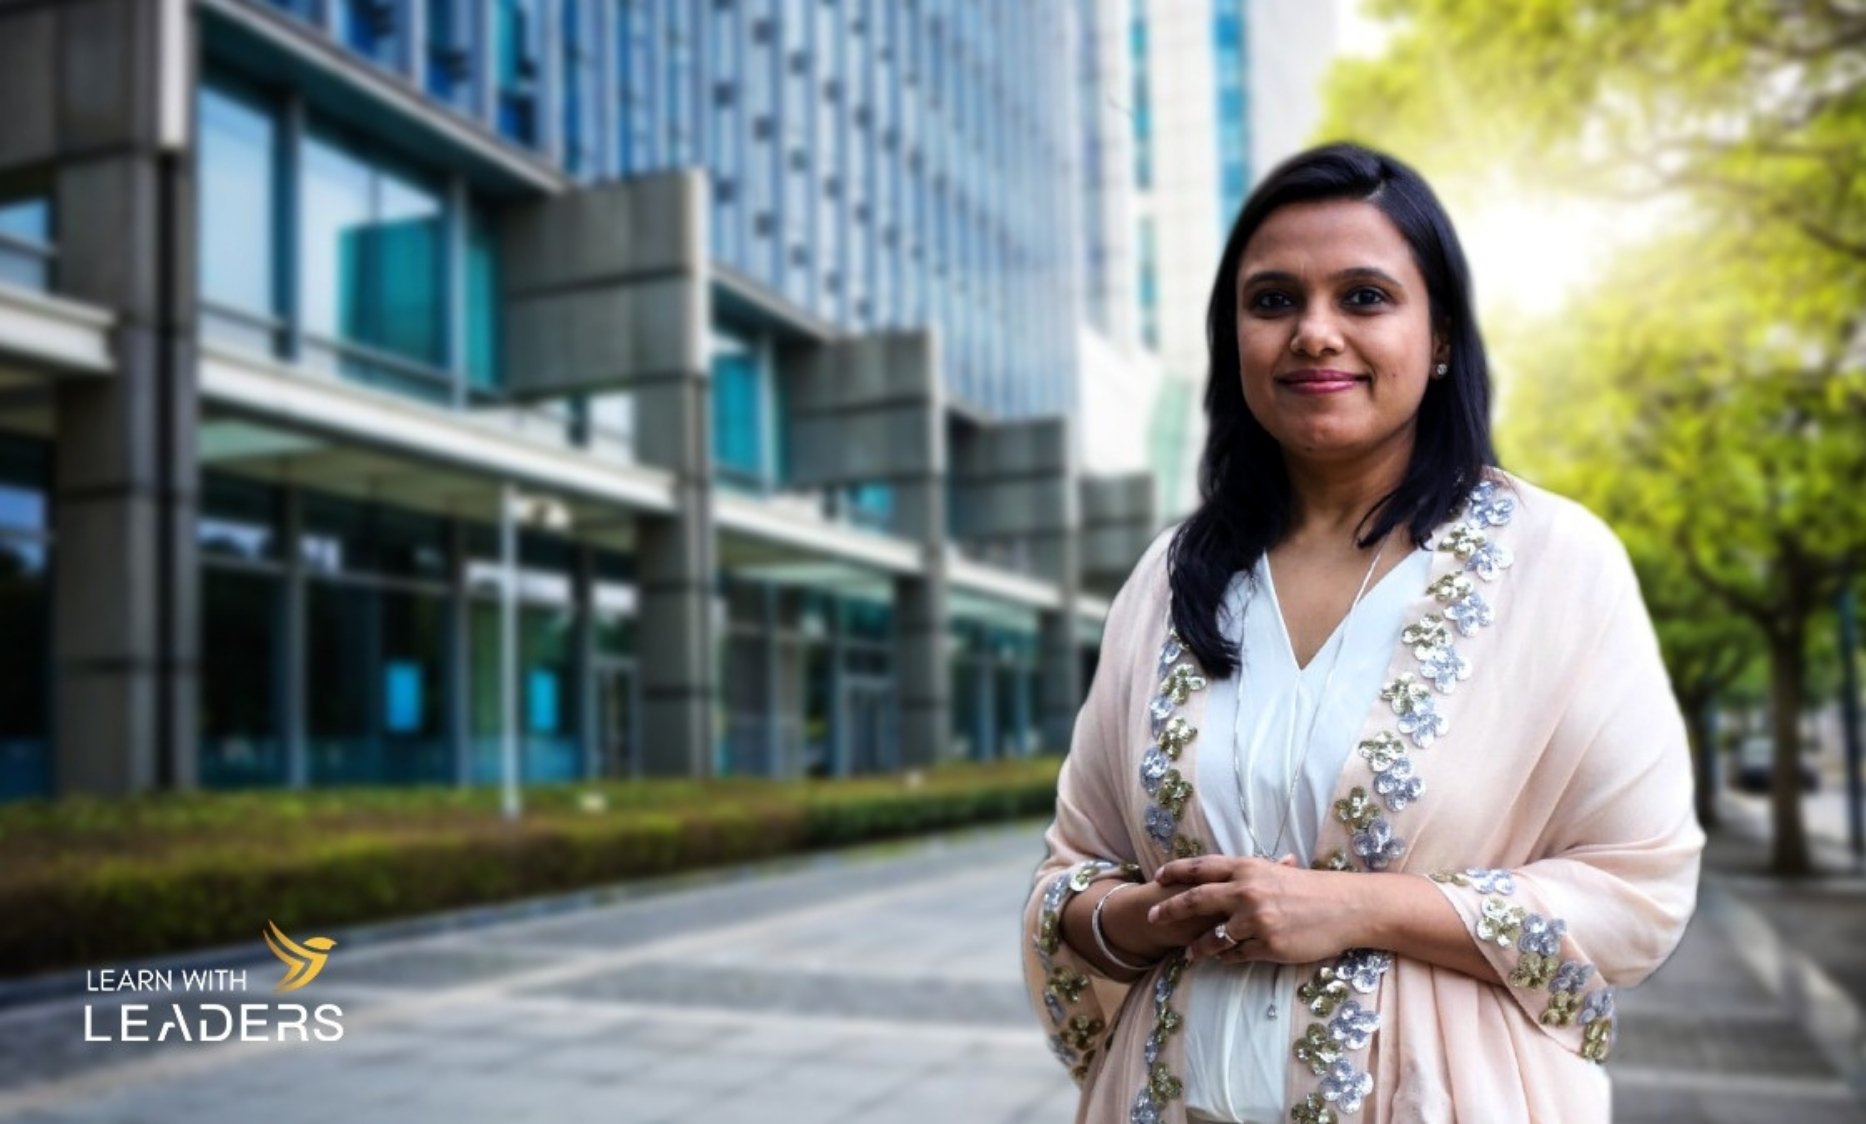 Meet Gunjan Aggarwal, the woman entrepreneur democratizing IVY-quality education for high school students - Digpu News